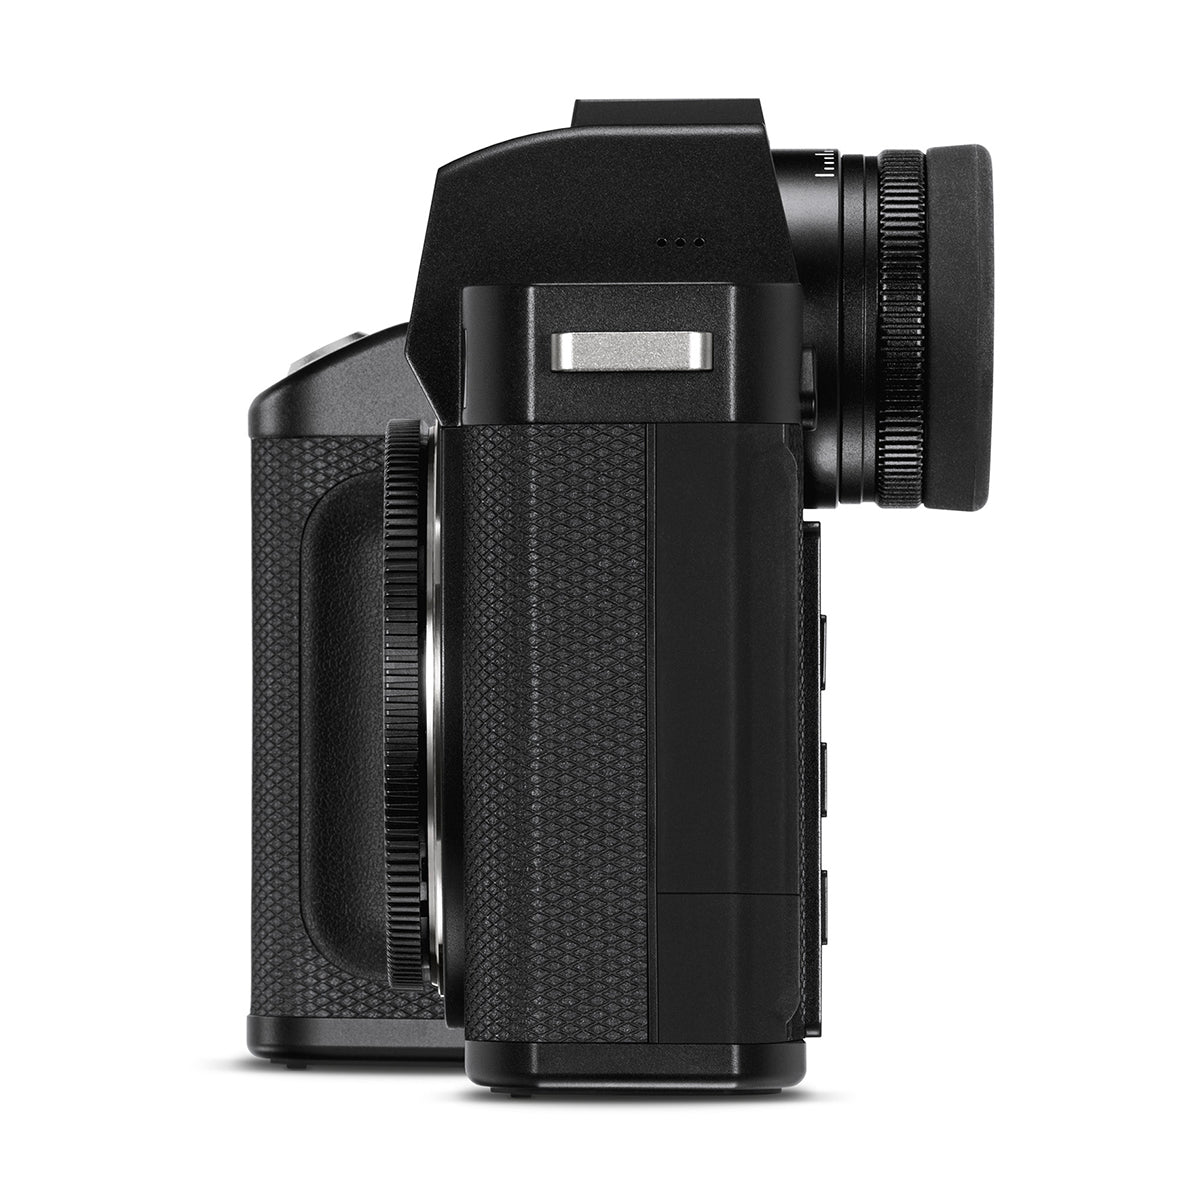 Leica SL2 Mirrorless Digital Camera Body